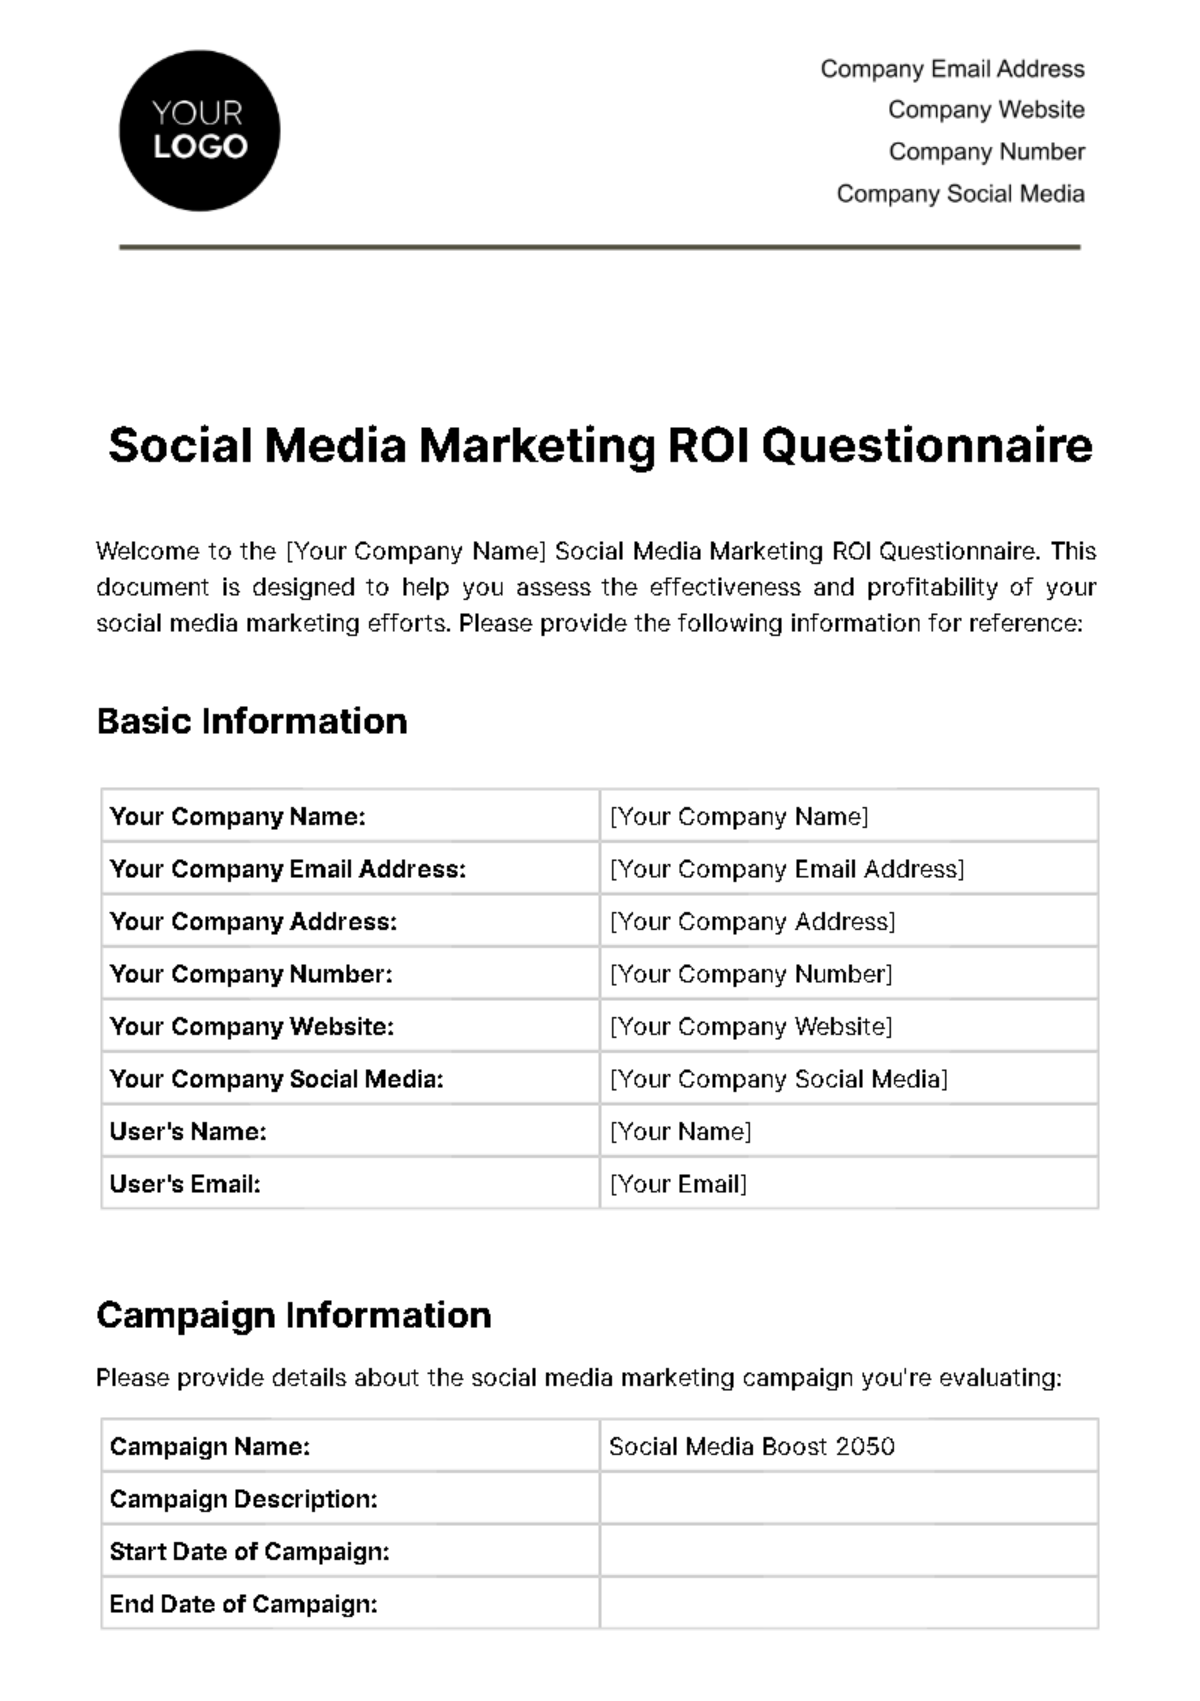 Social Media Marketing ROI Questionnaire Template